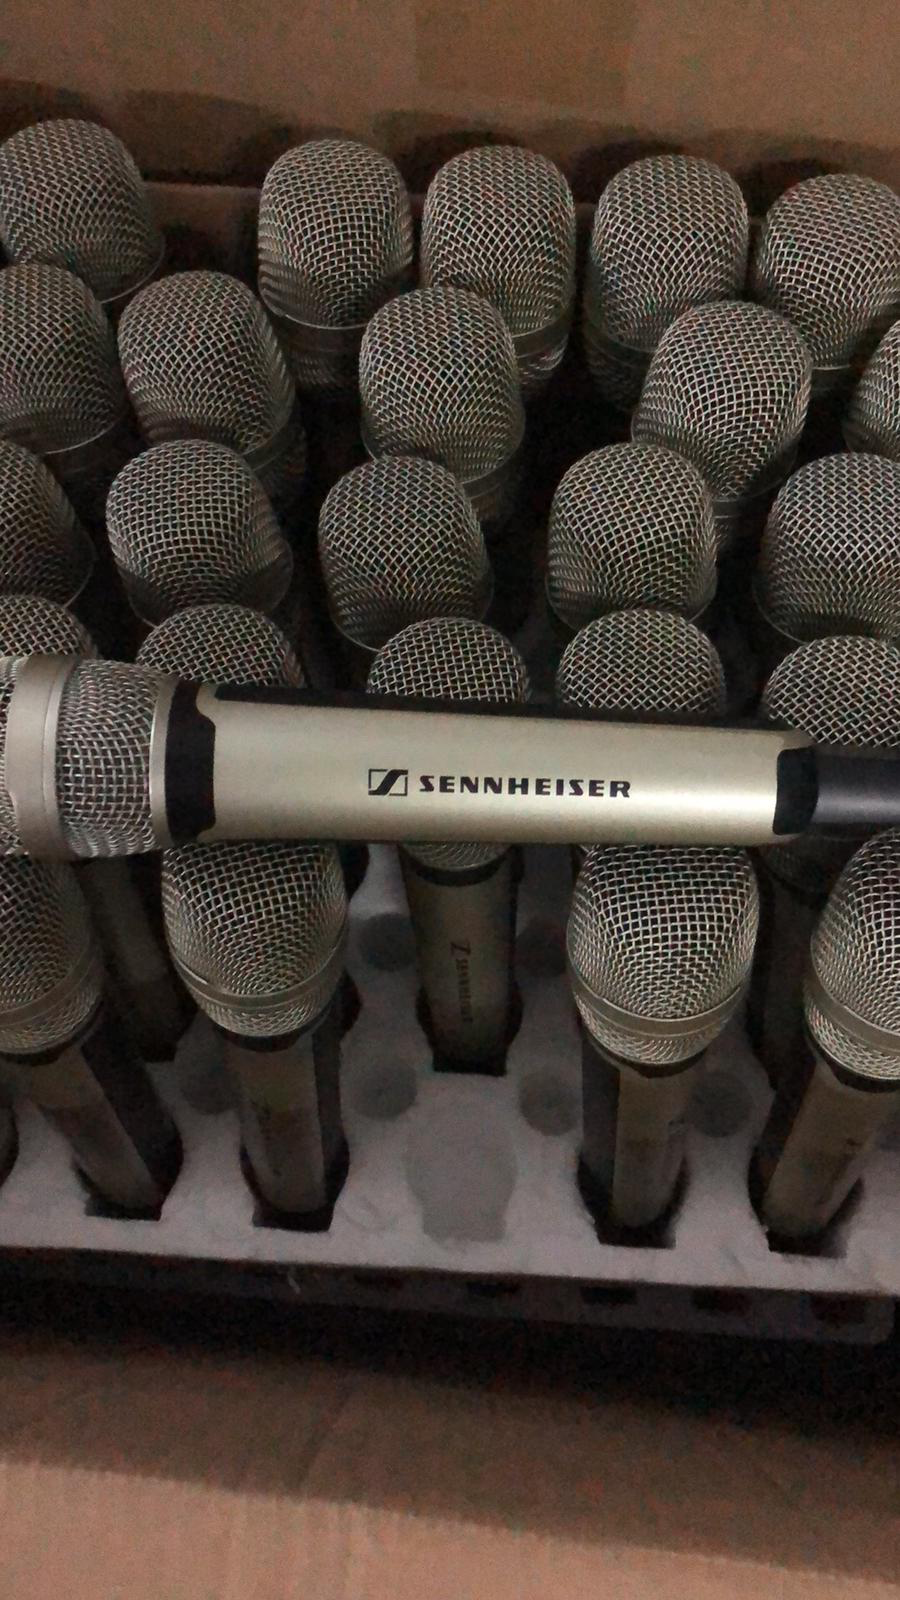 Counterfeit Sennheiser Microphones